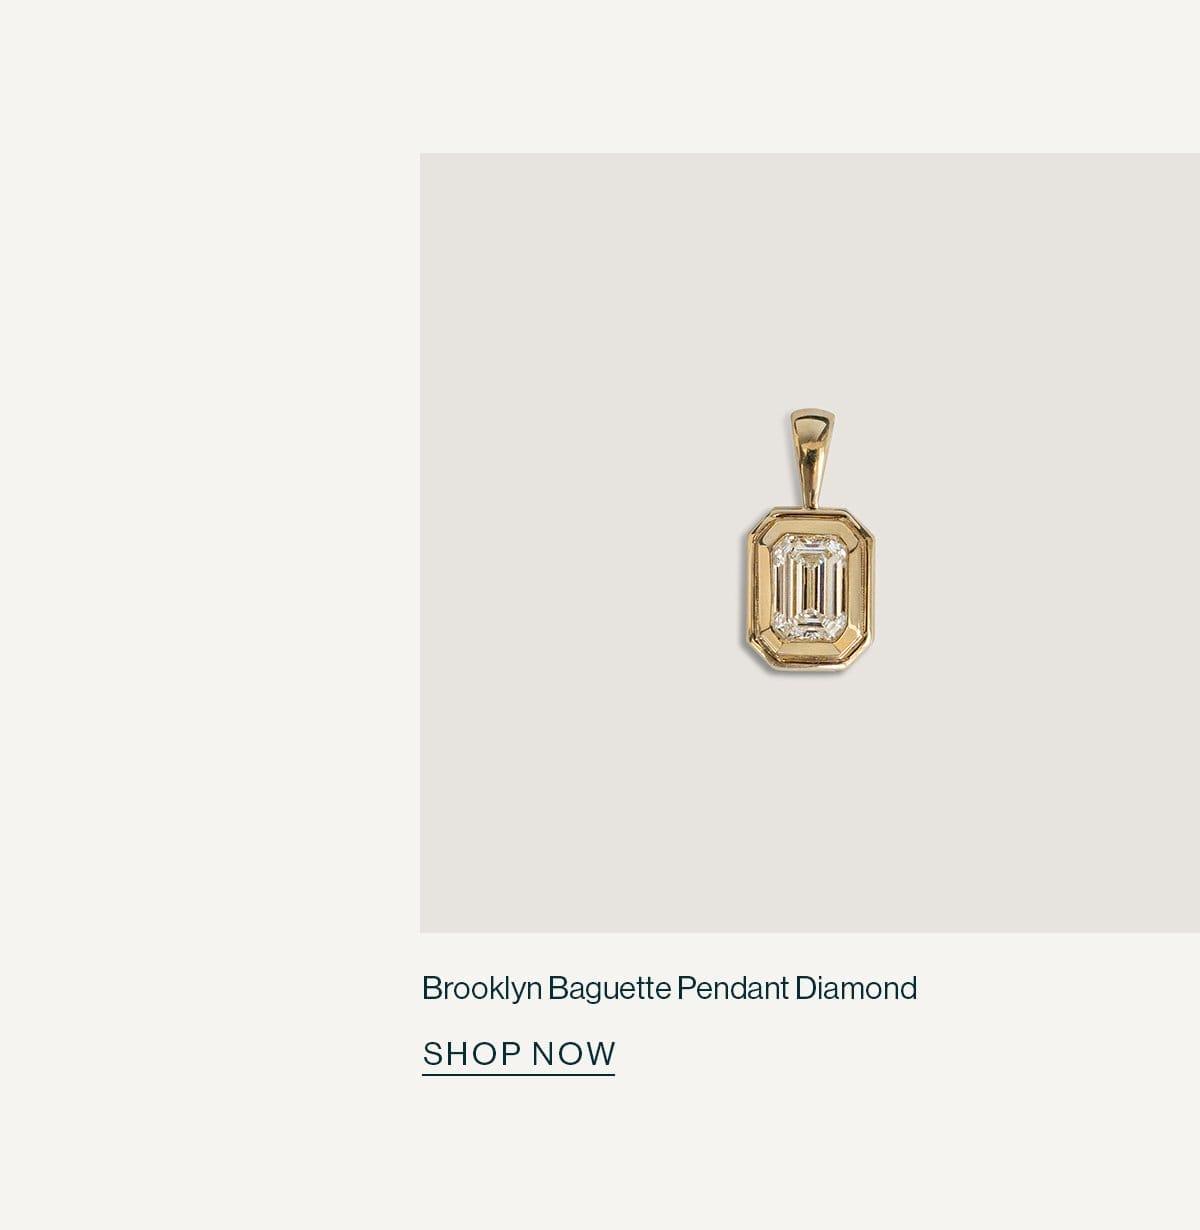 Brooklyn Baguette Pendant Diamond